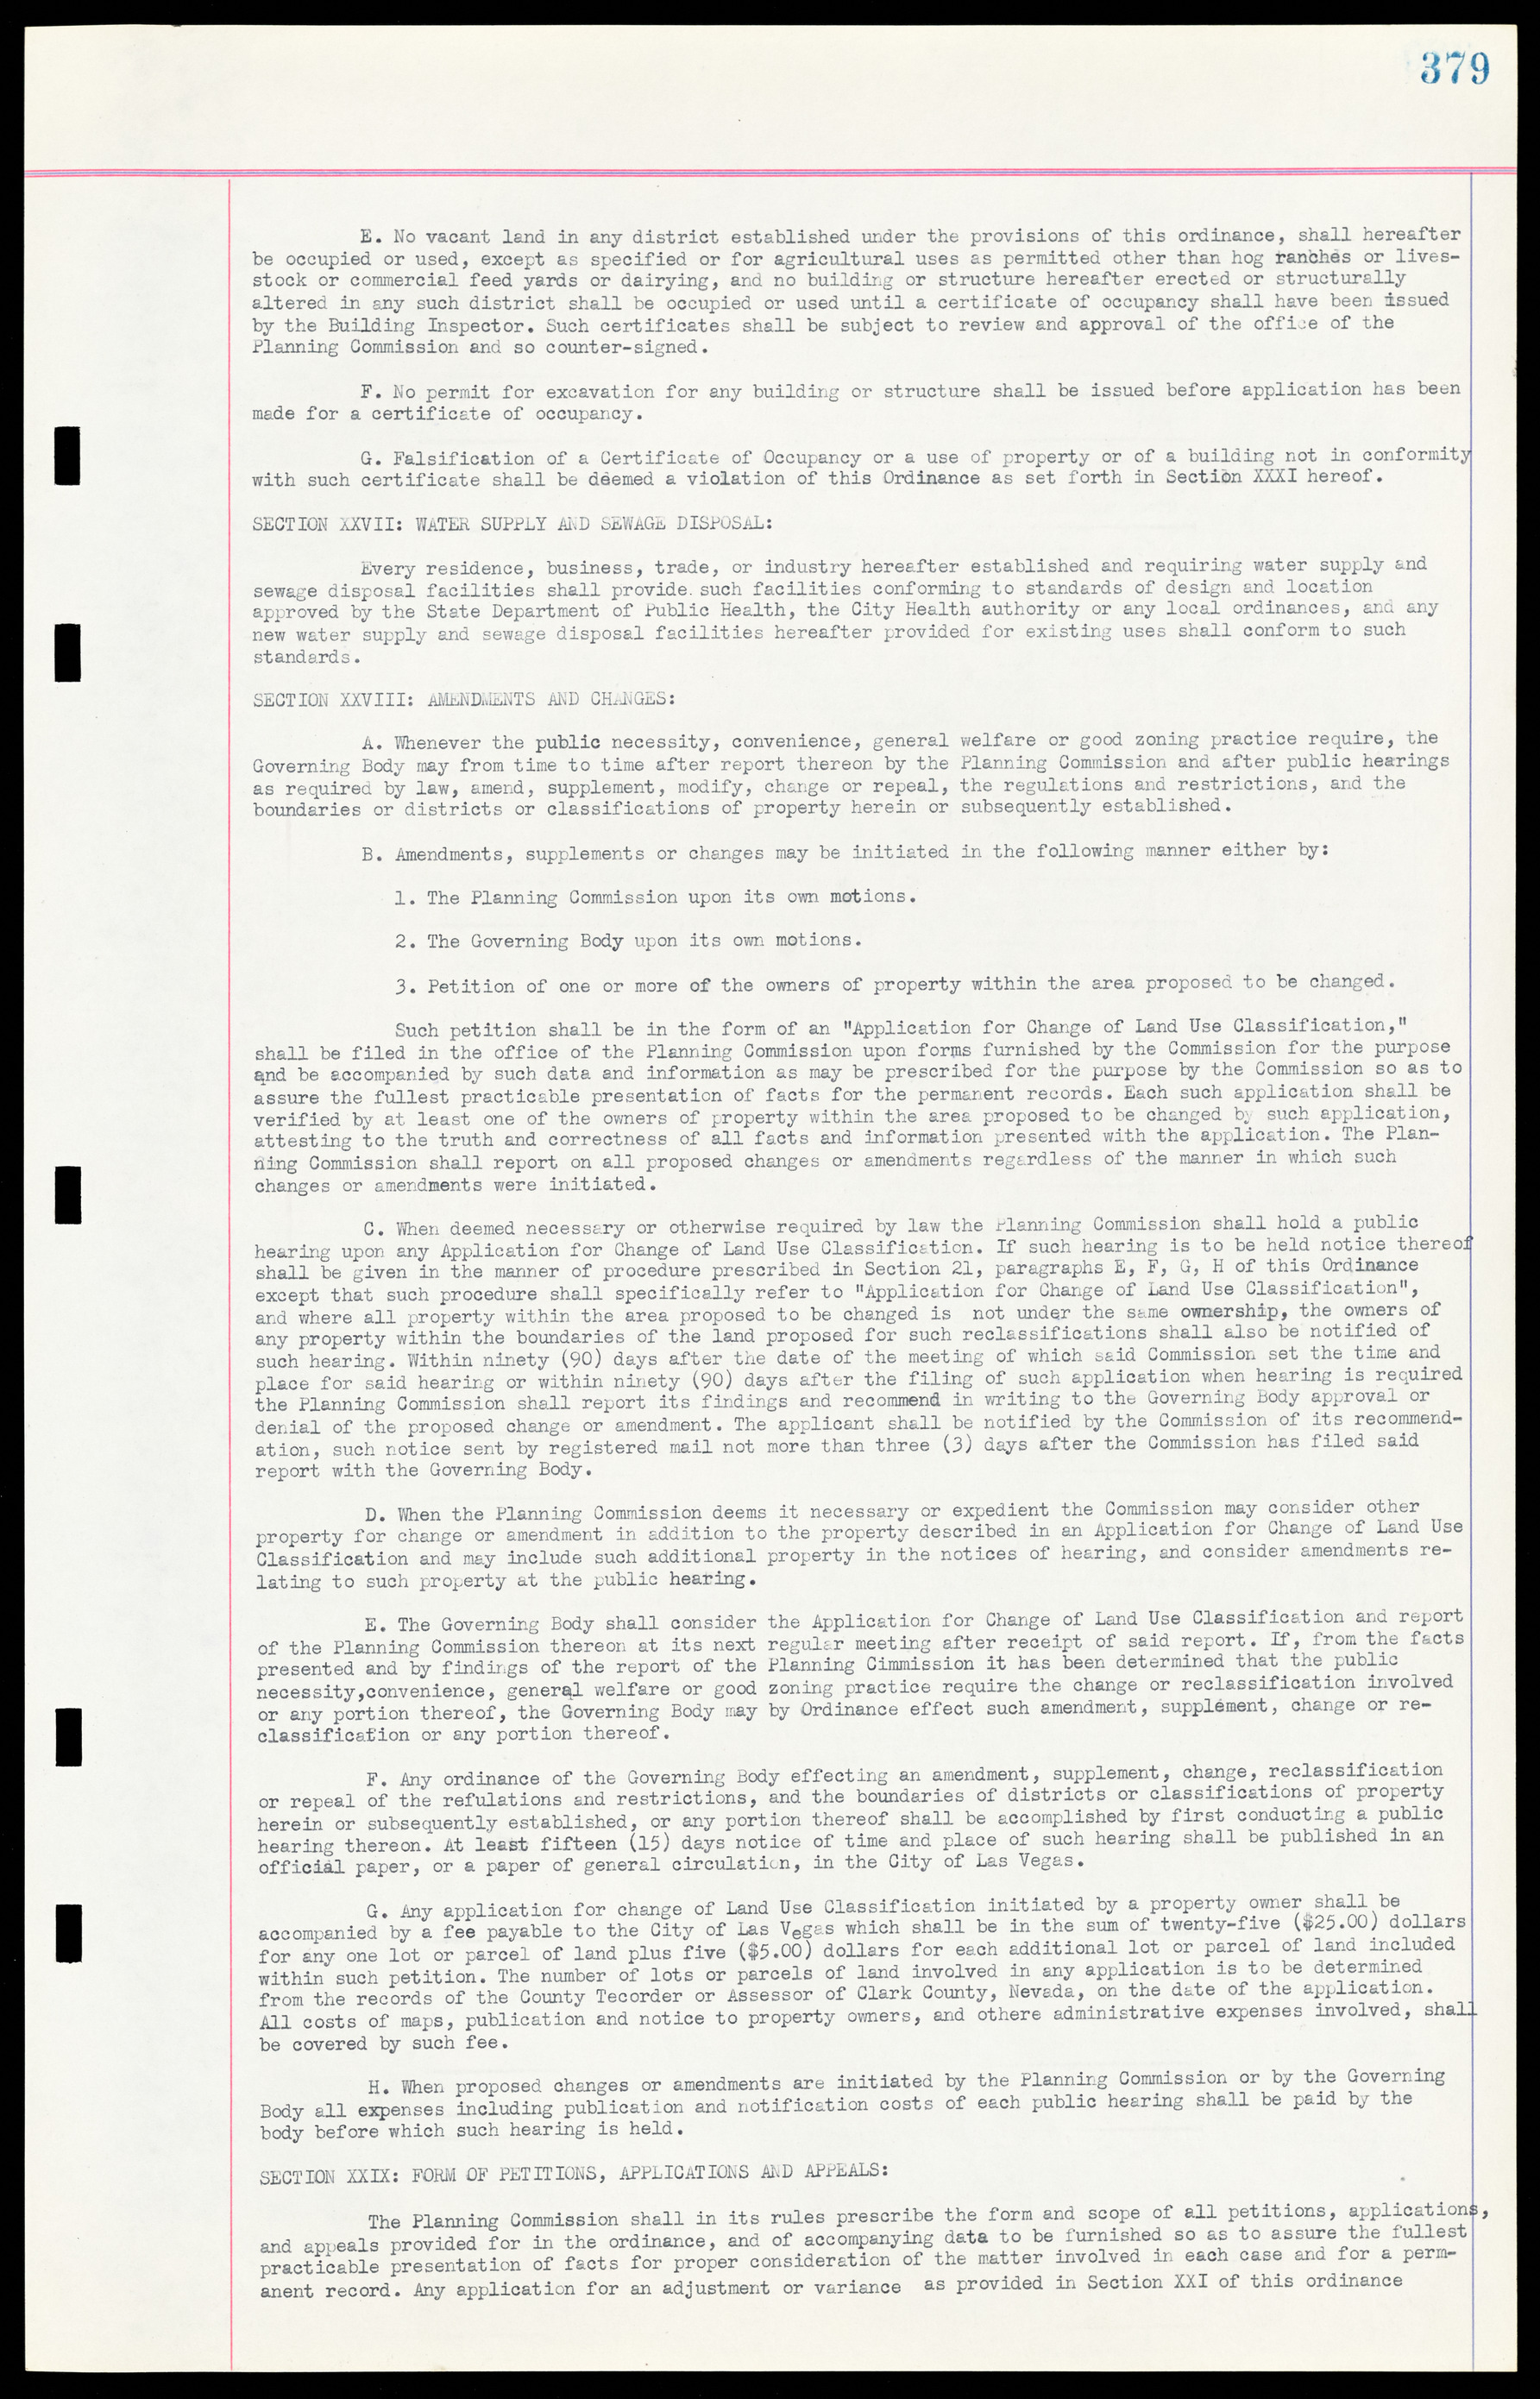 Las Vegas City Ordinances, March 31, 1933 to October 25, 1950, lvc000014-408